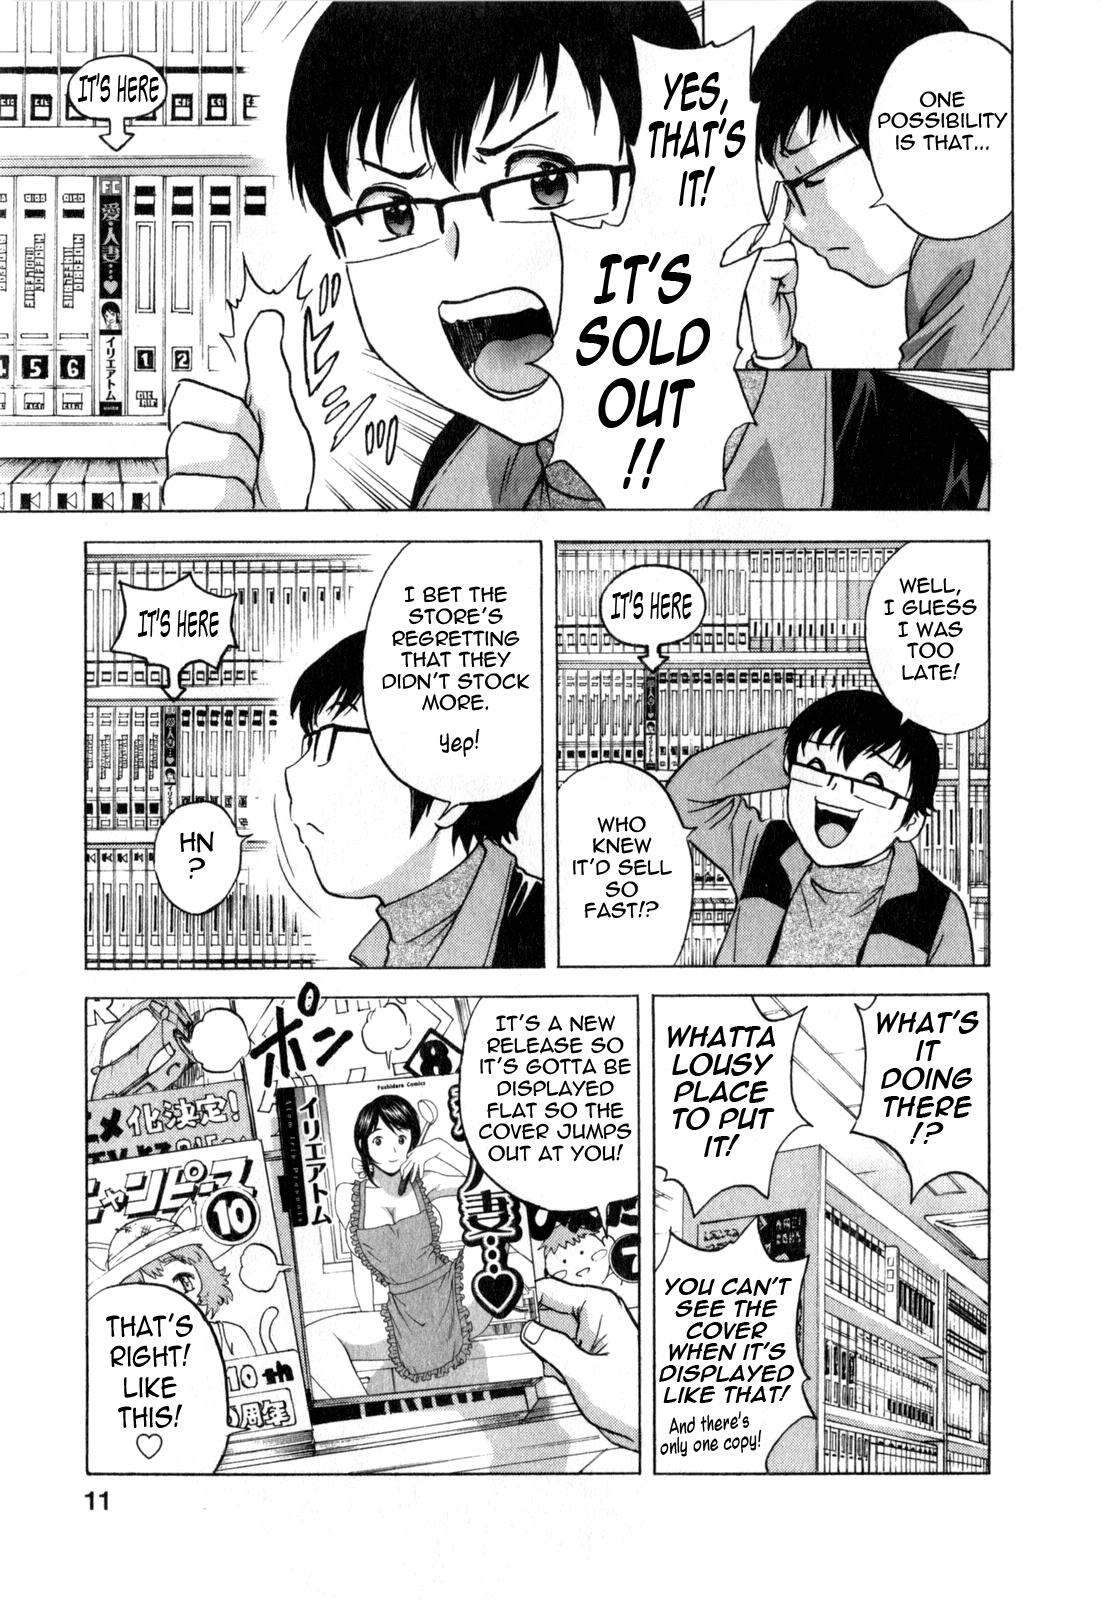 [Hidemaru] Life with Married Women Just Like a Manga 3 - Ch. 1-5 [English] {Tadanohito} 12